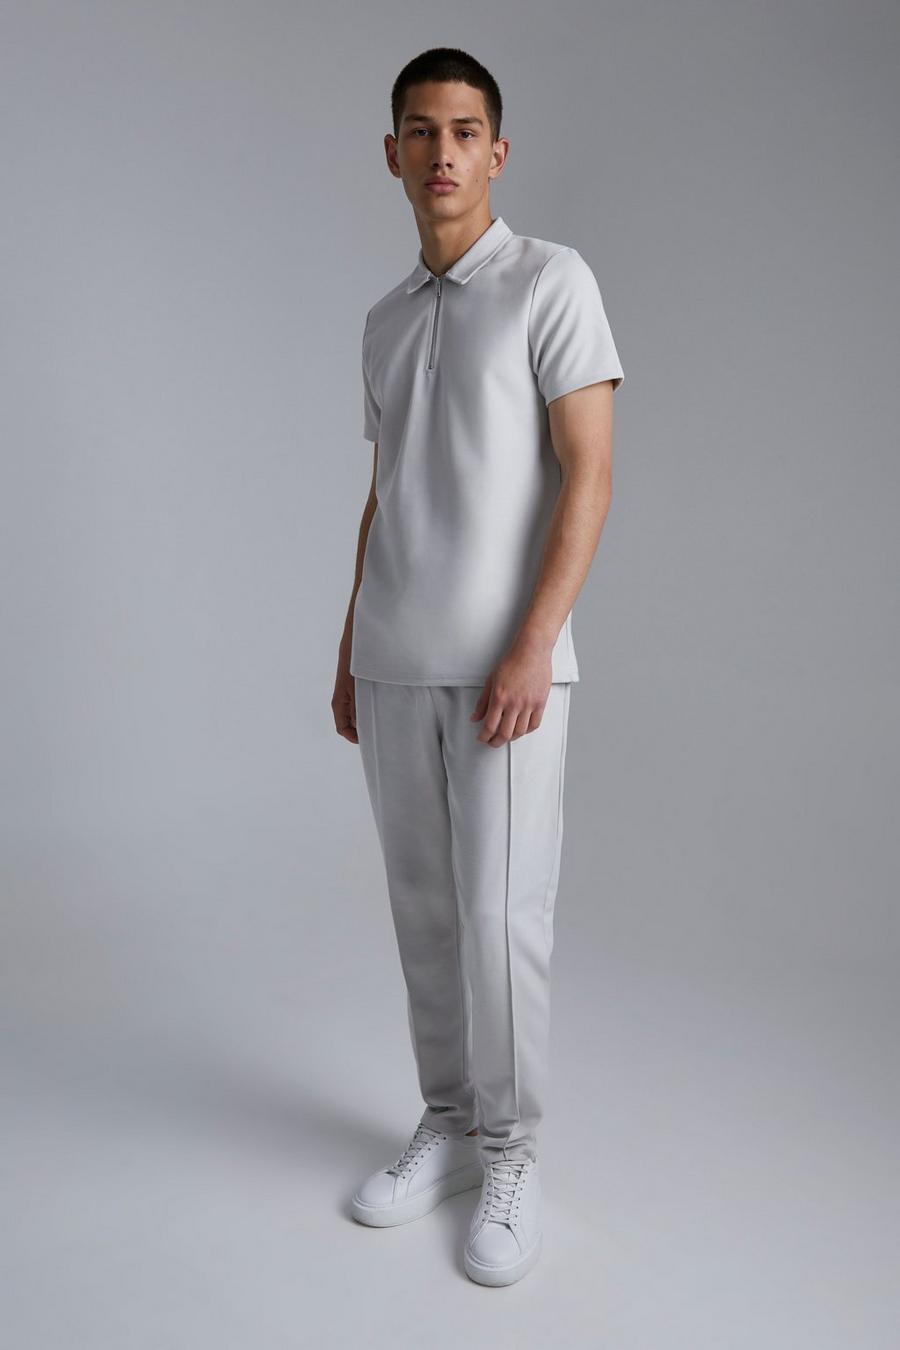 Muscle-Fit Poloshirt mit 1/4 Reißverschluss und Jogginghose, Light grey